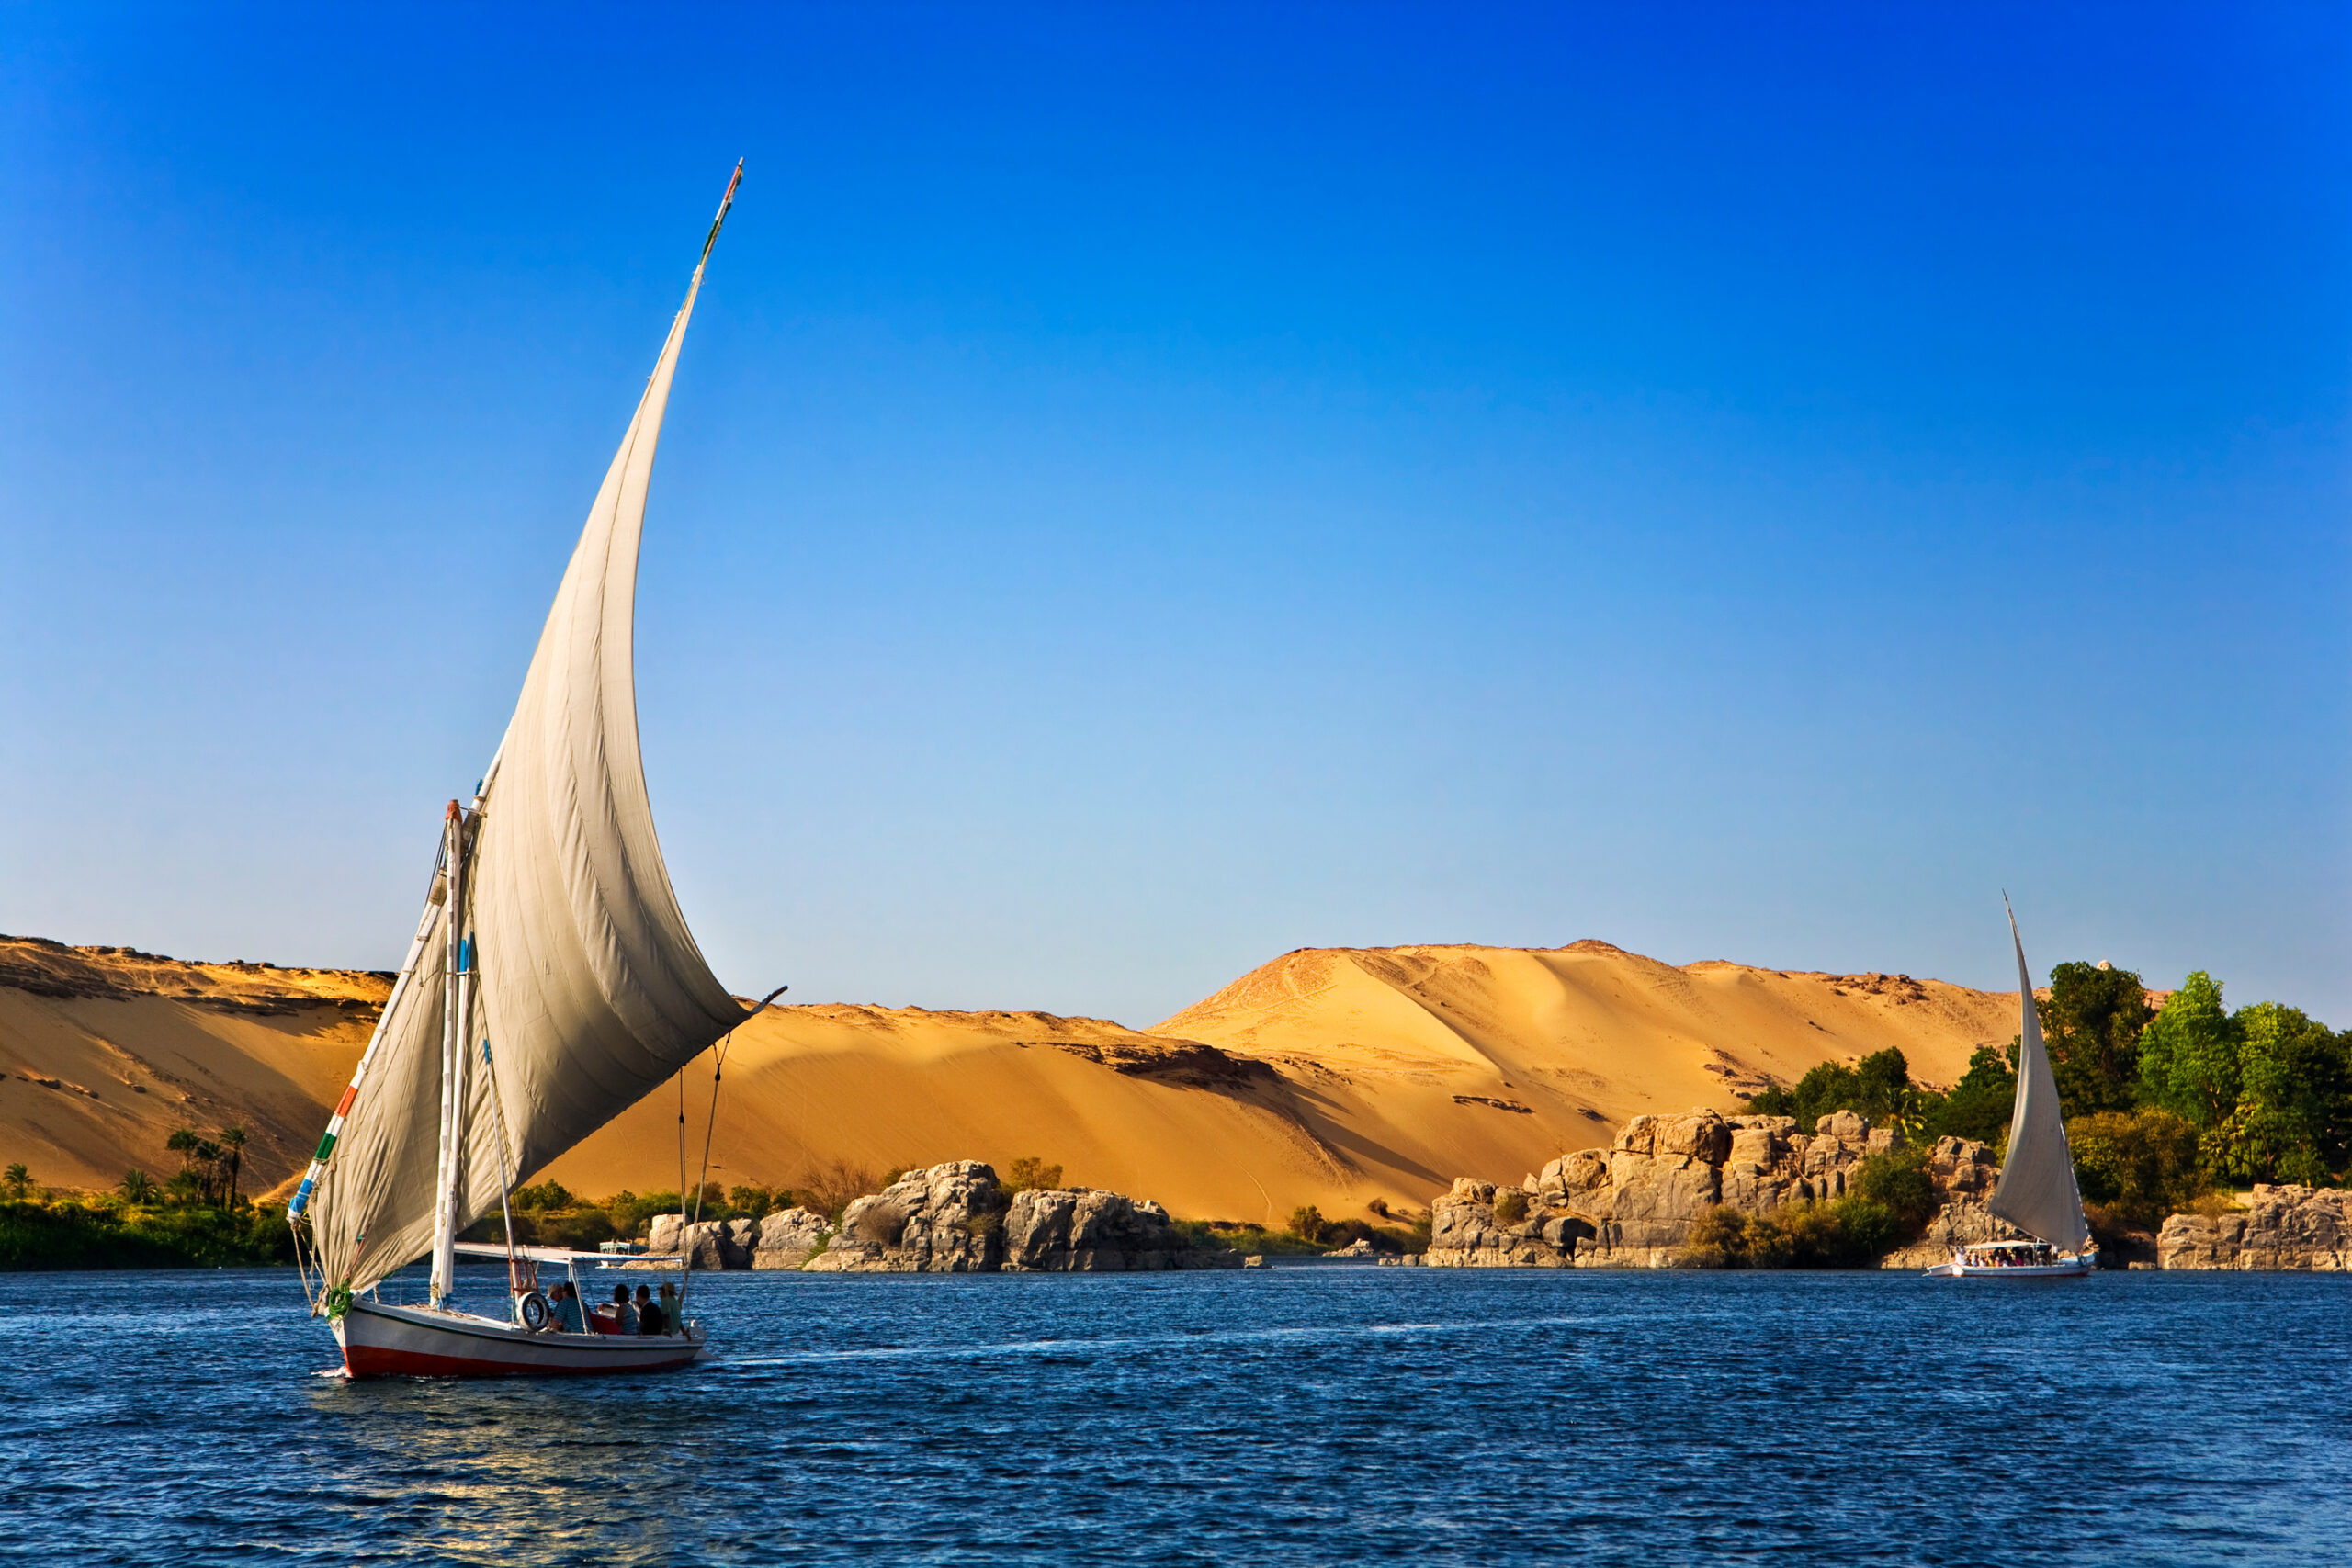 Egypt. The Nile at Aswan